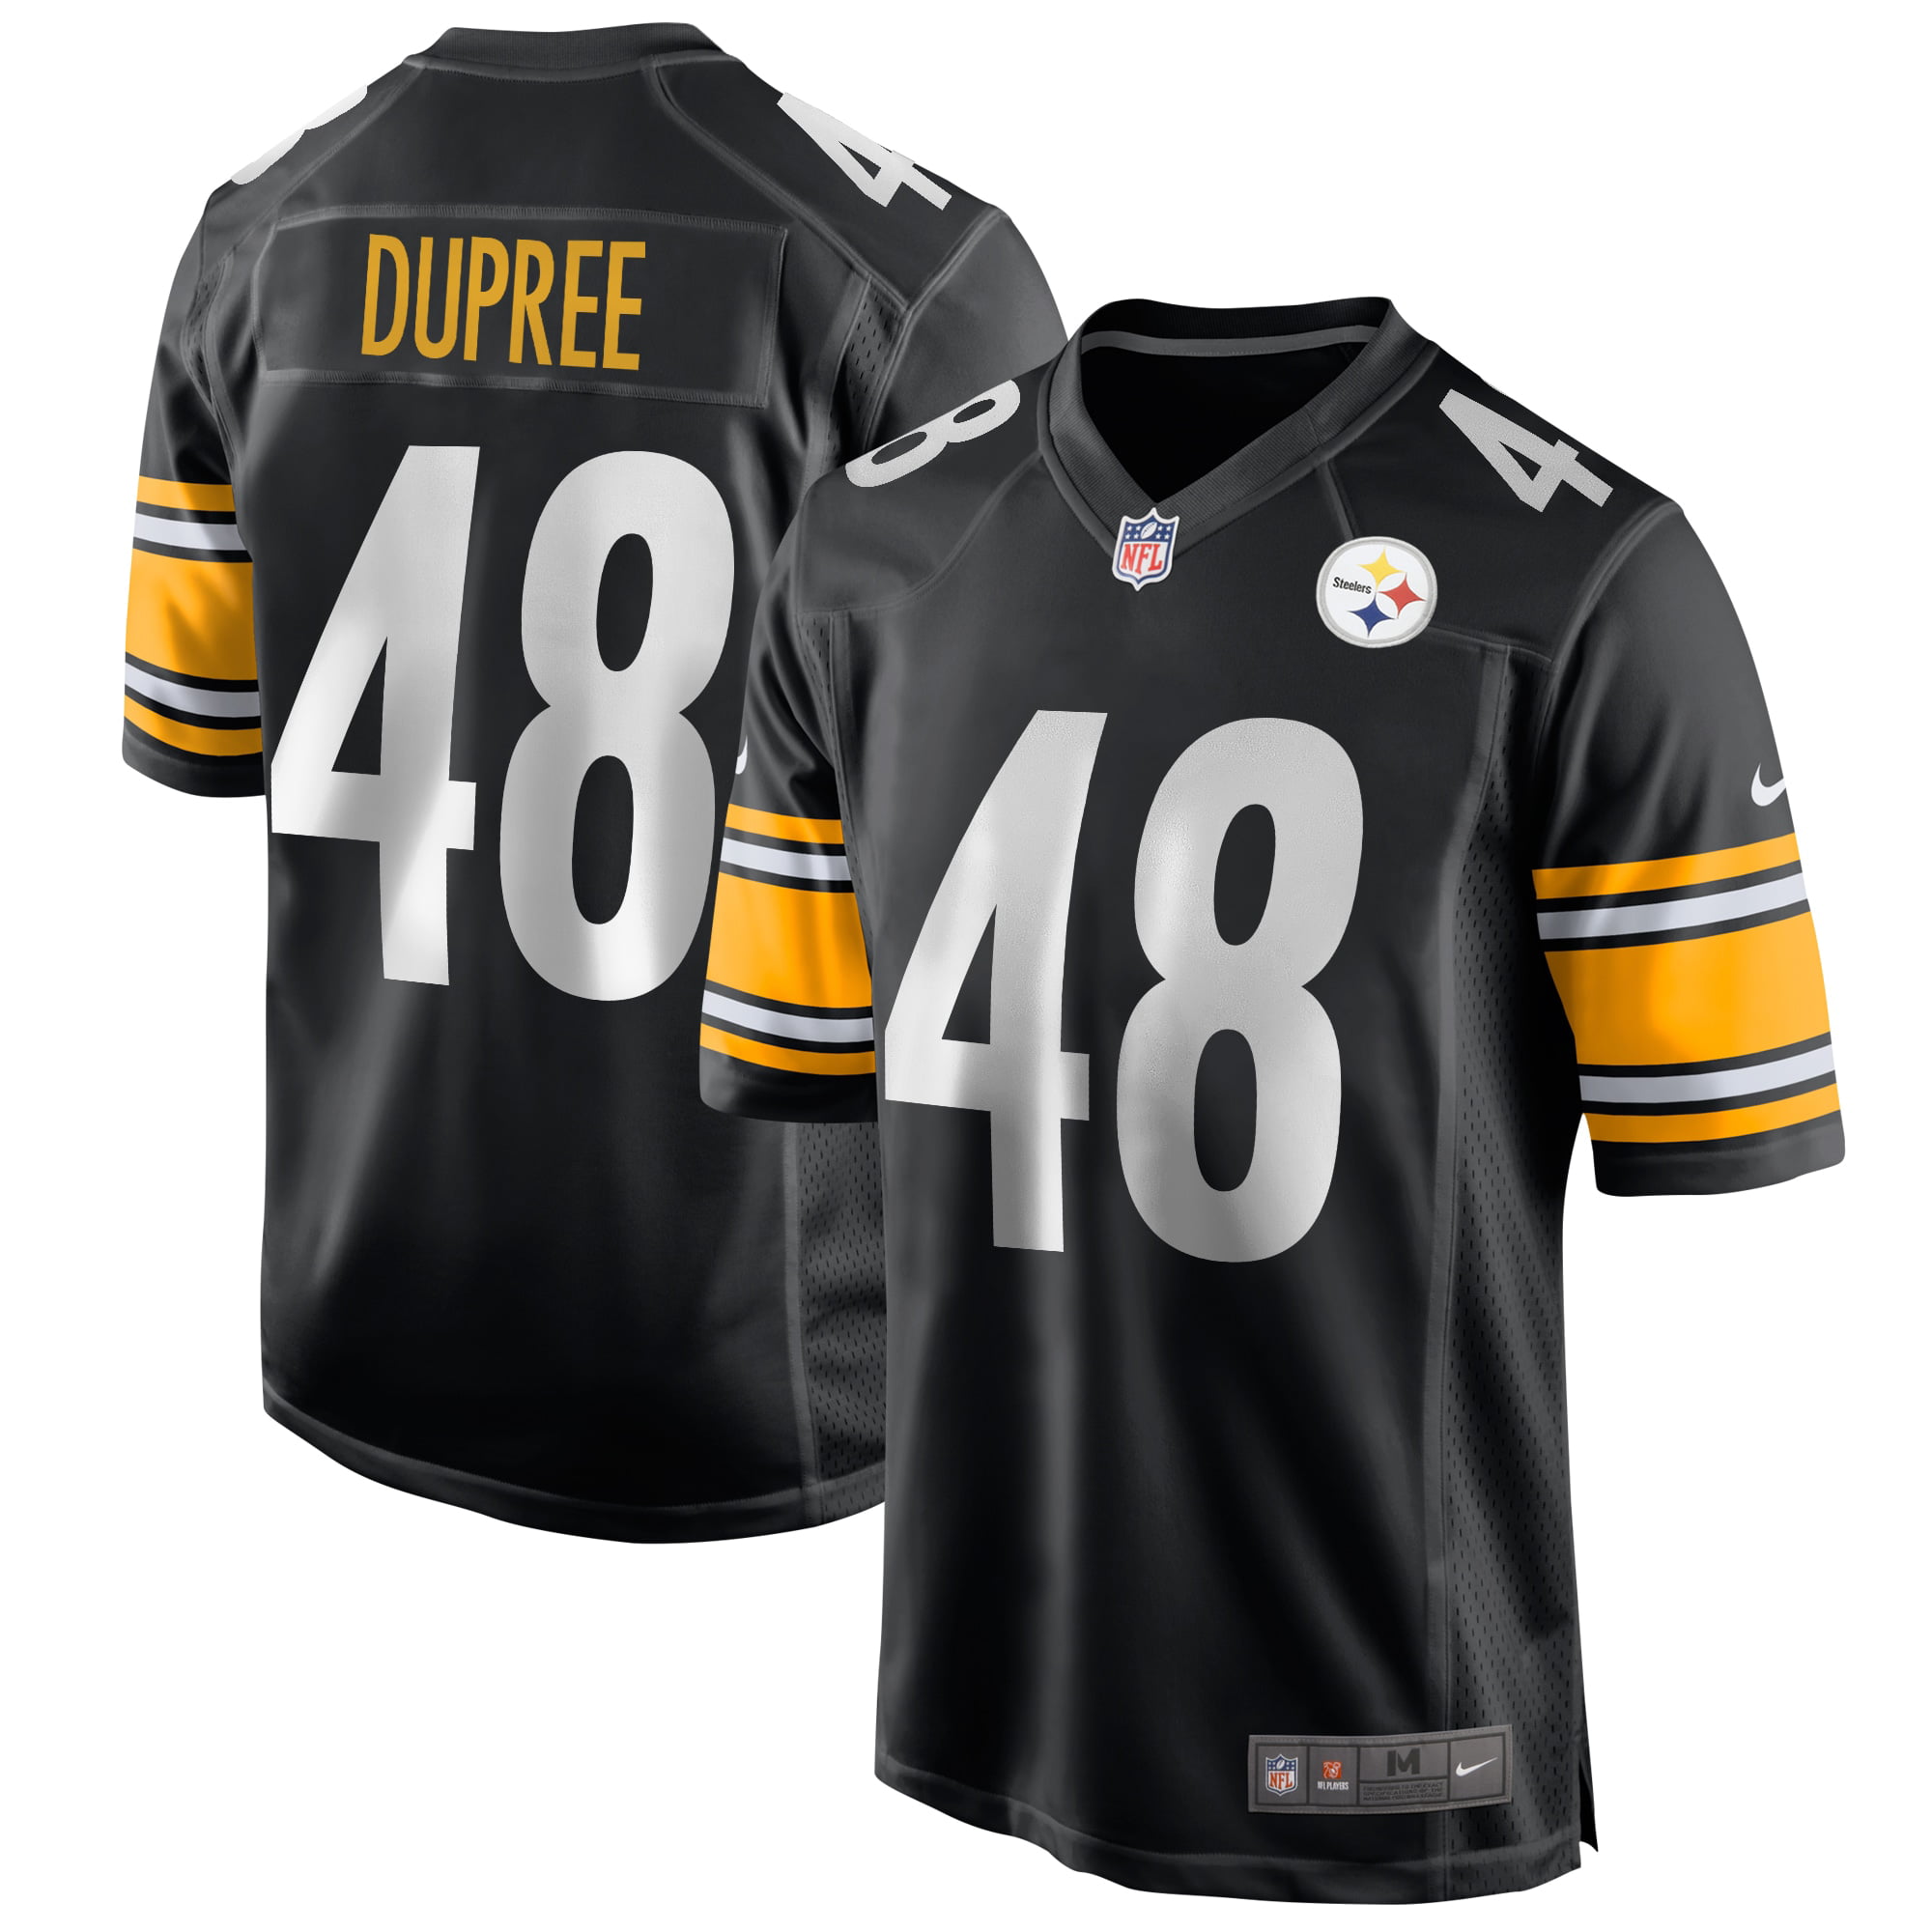 Bud Dupree Pittsburgh Steelers Nike Game Jersey - Black - Walmart.com